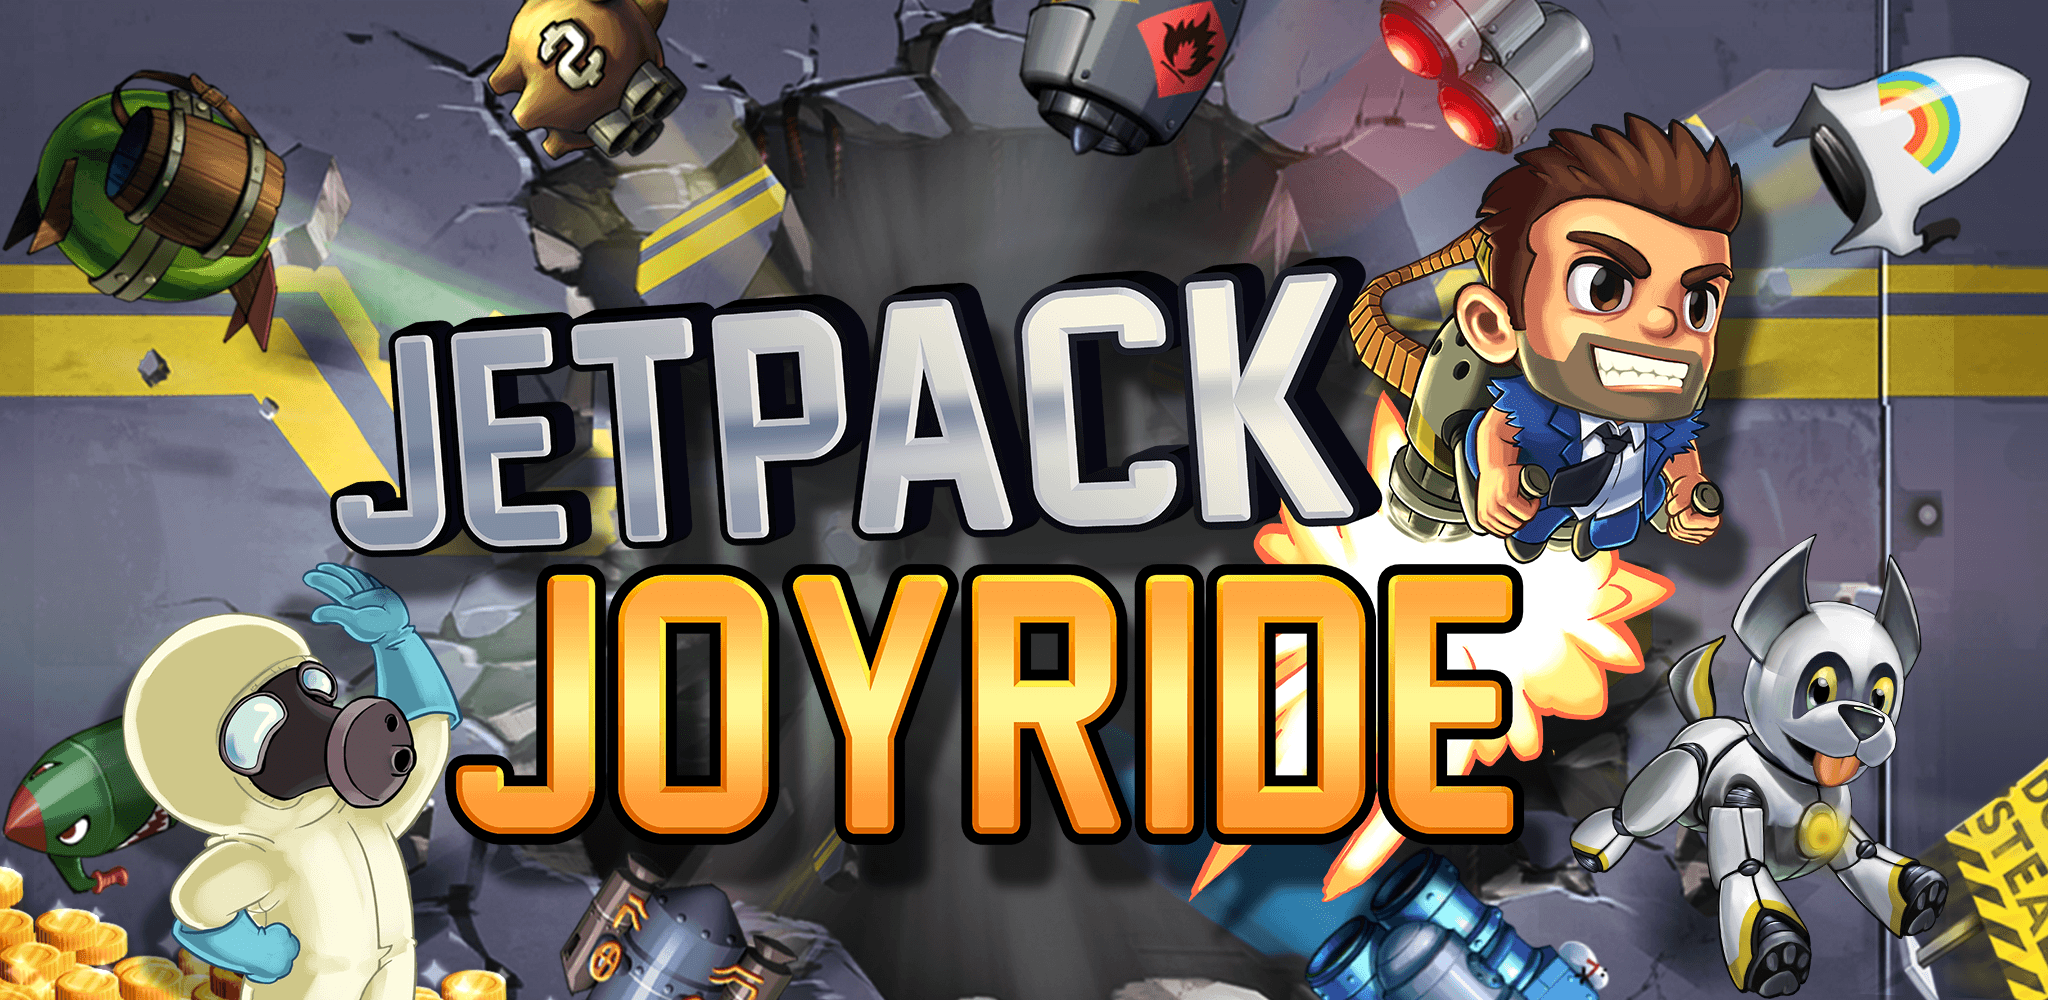 Jetpack Joyride rockets onto PSP, PS3 and PS Vita today